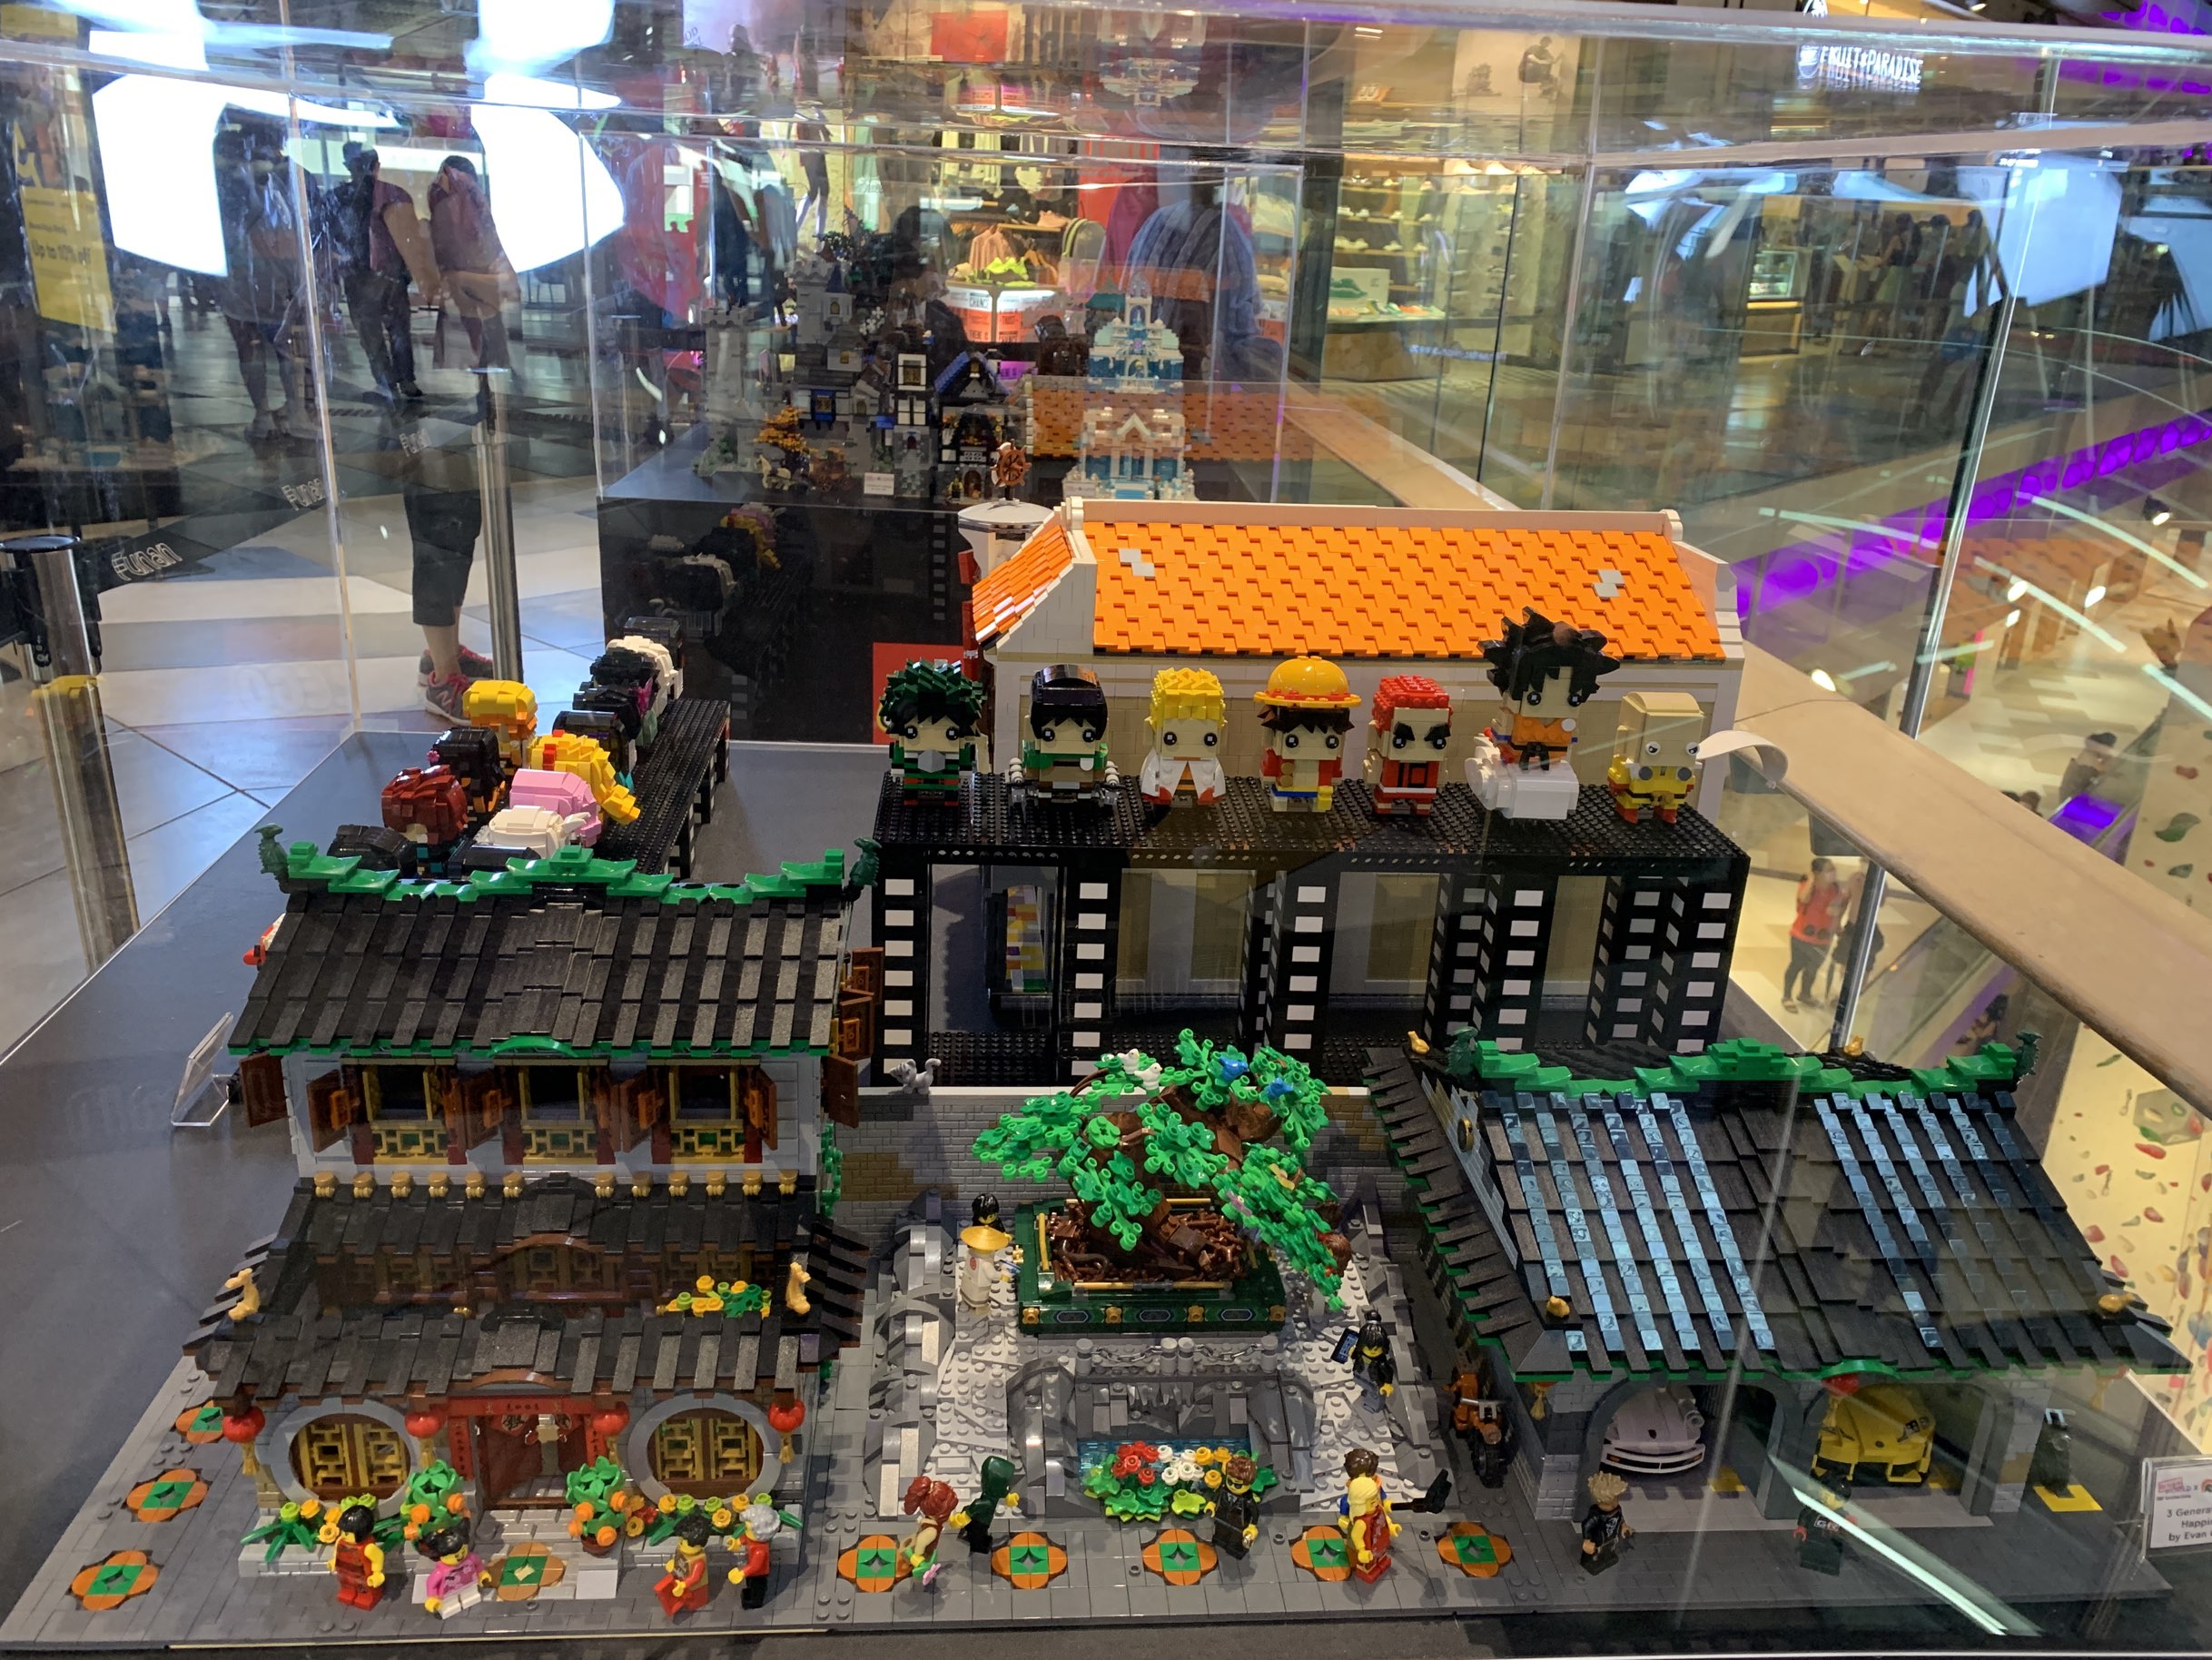 Free Blockbuster Lego Exhibition | Trip.com Singapore